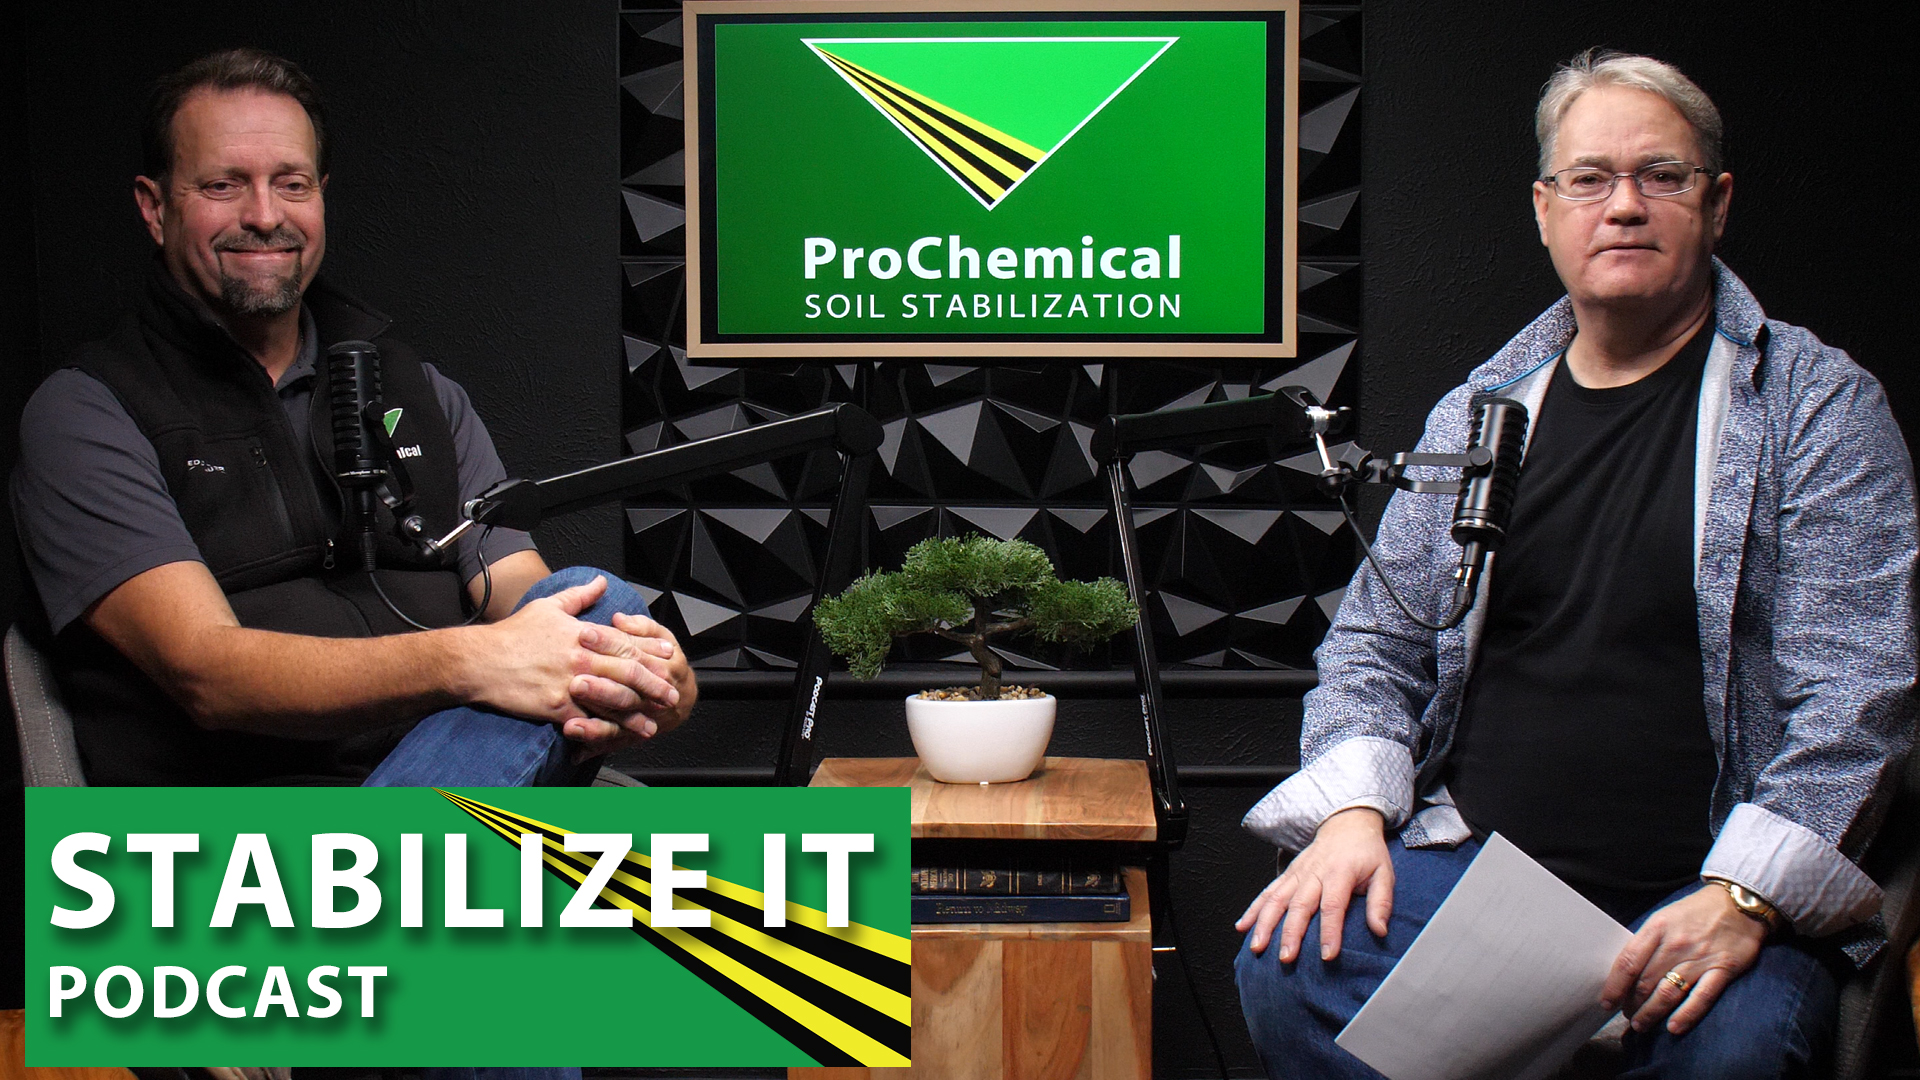 Stabilize It Podcast 02 - ProChemical Soil Stabilization